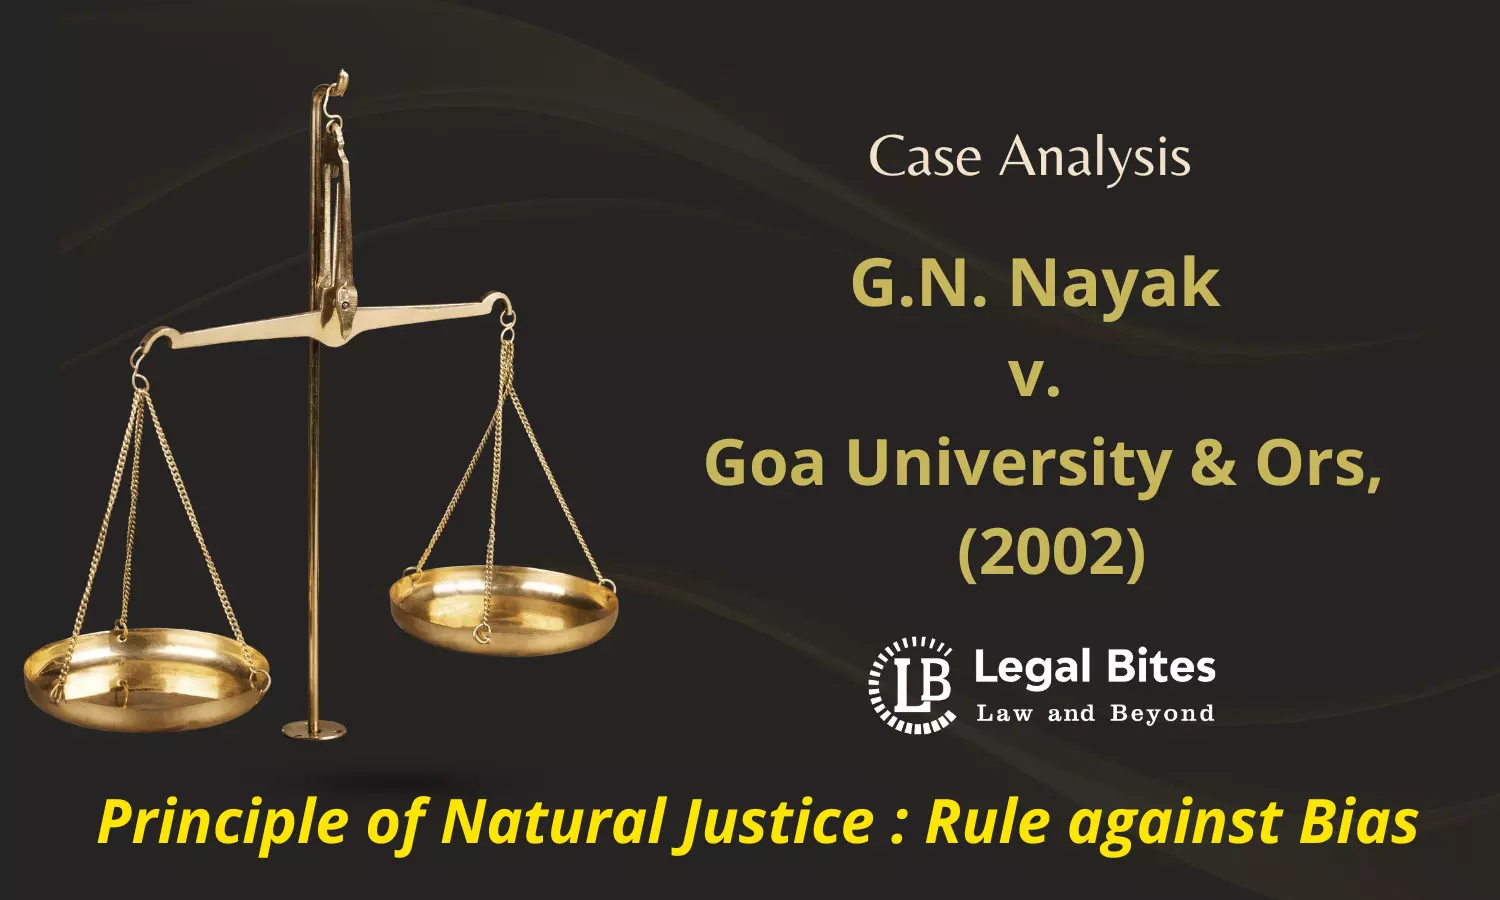 Case Analysis: G.N. Nayak v. Goa University & Ors, (2002) | Rule against Bias